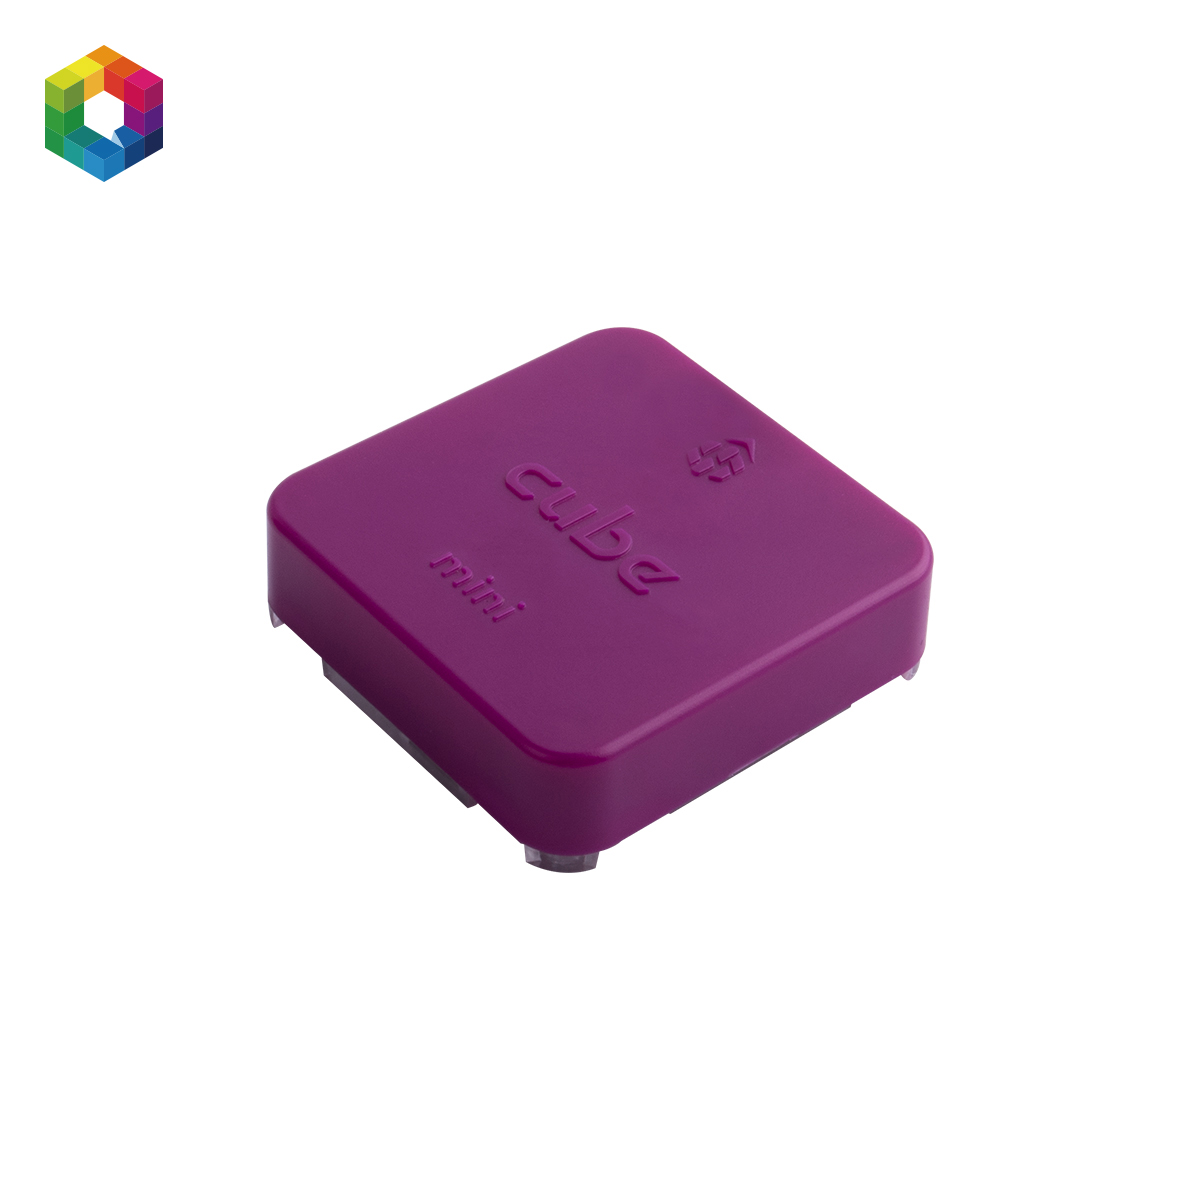 The Cube Purple